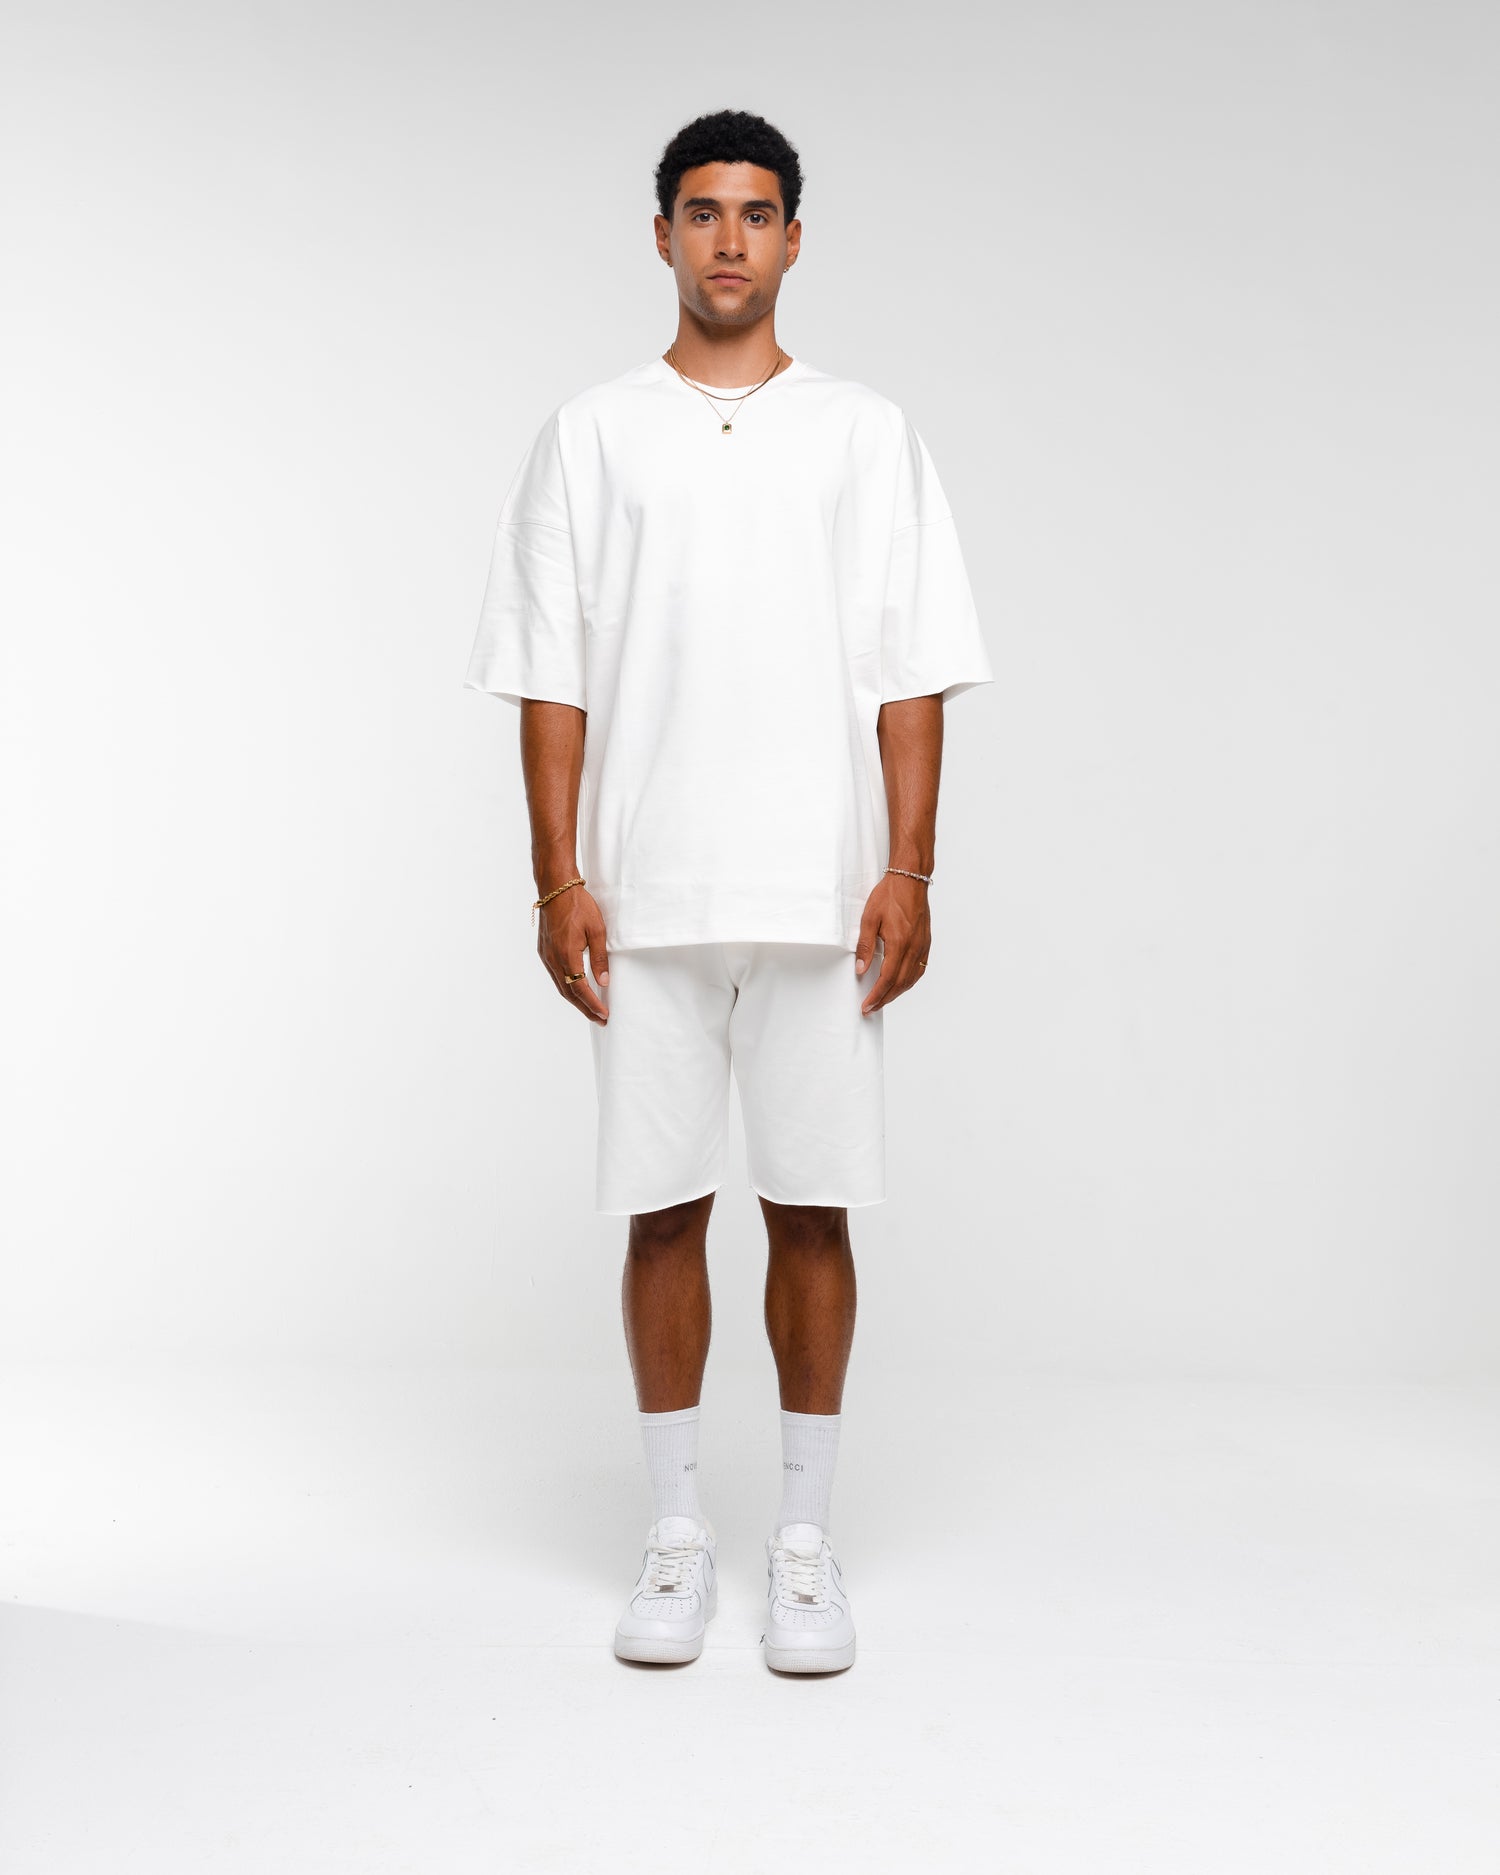 T-shirt&short white set